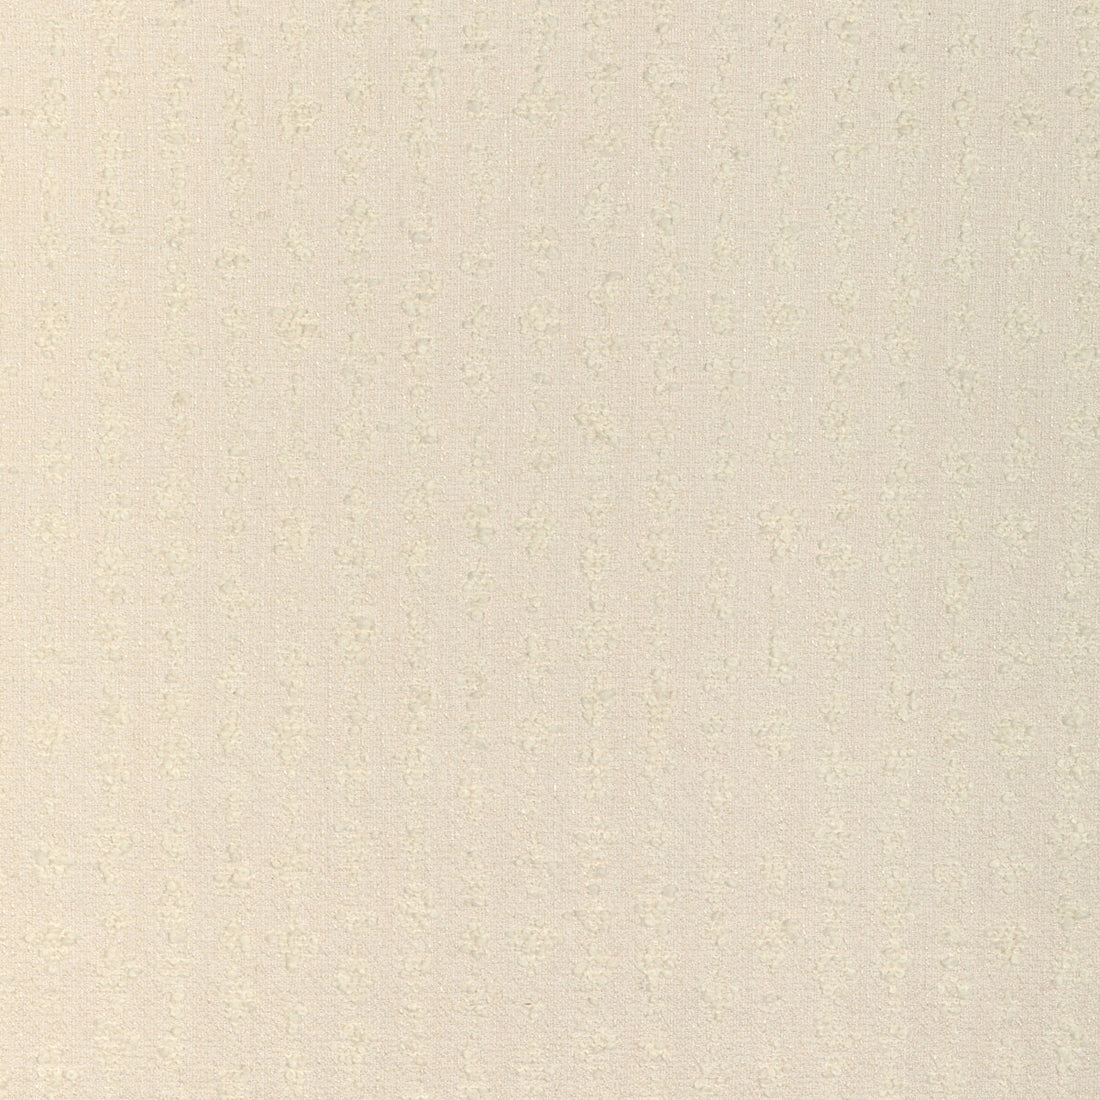 Serai fabric in vanilla color - pattern GWF-3795.111.0 - by Lee Jofa Modern in the Kelly Wearstler VIII collection